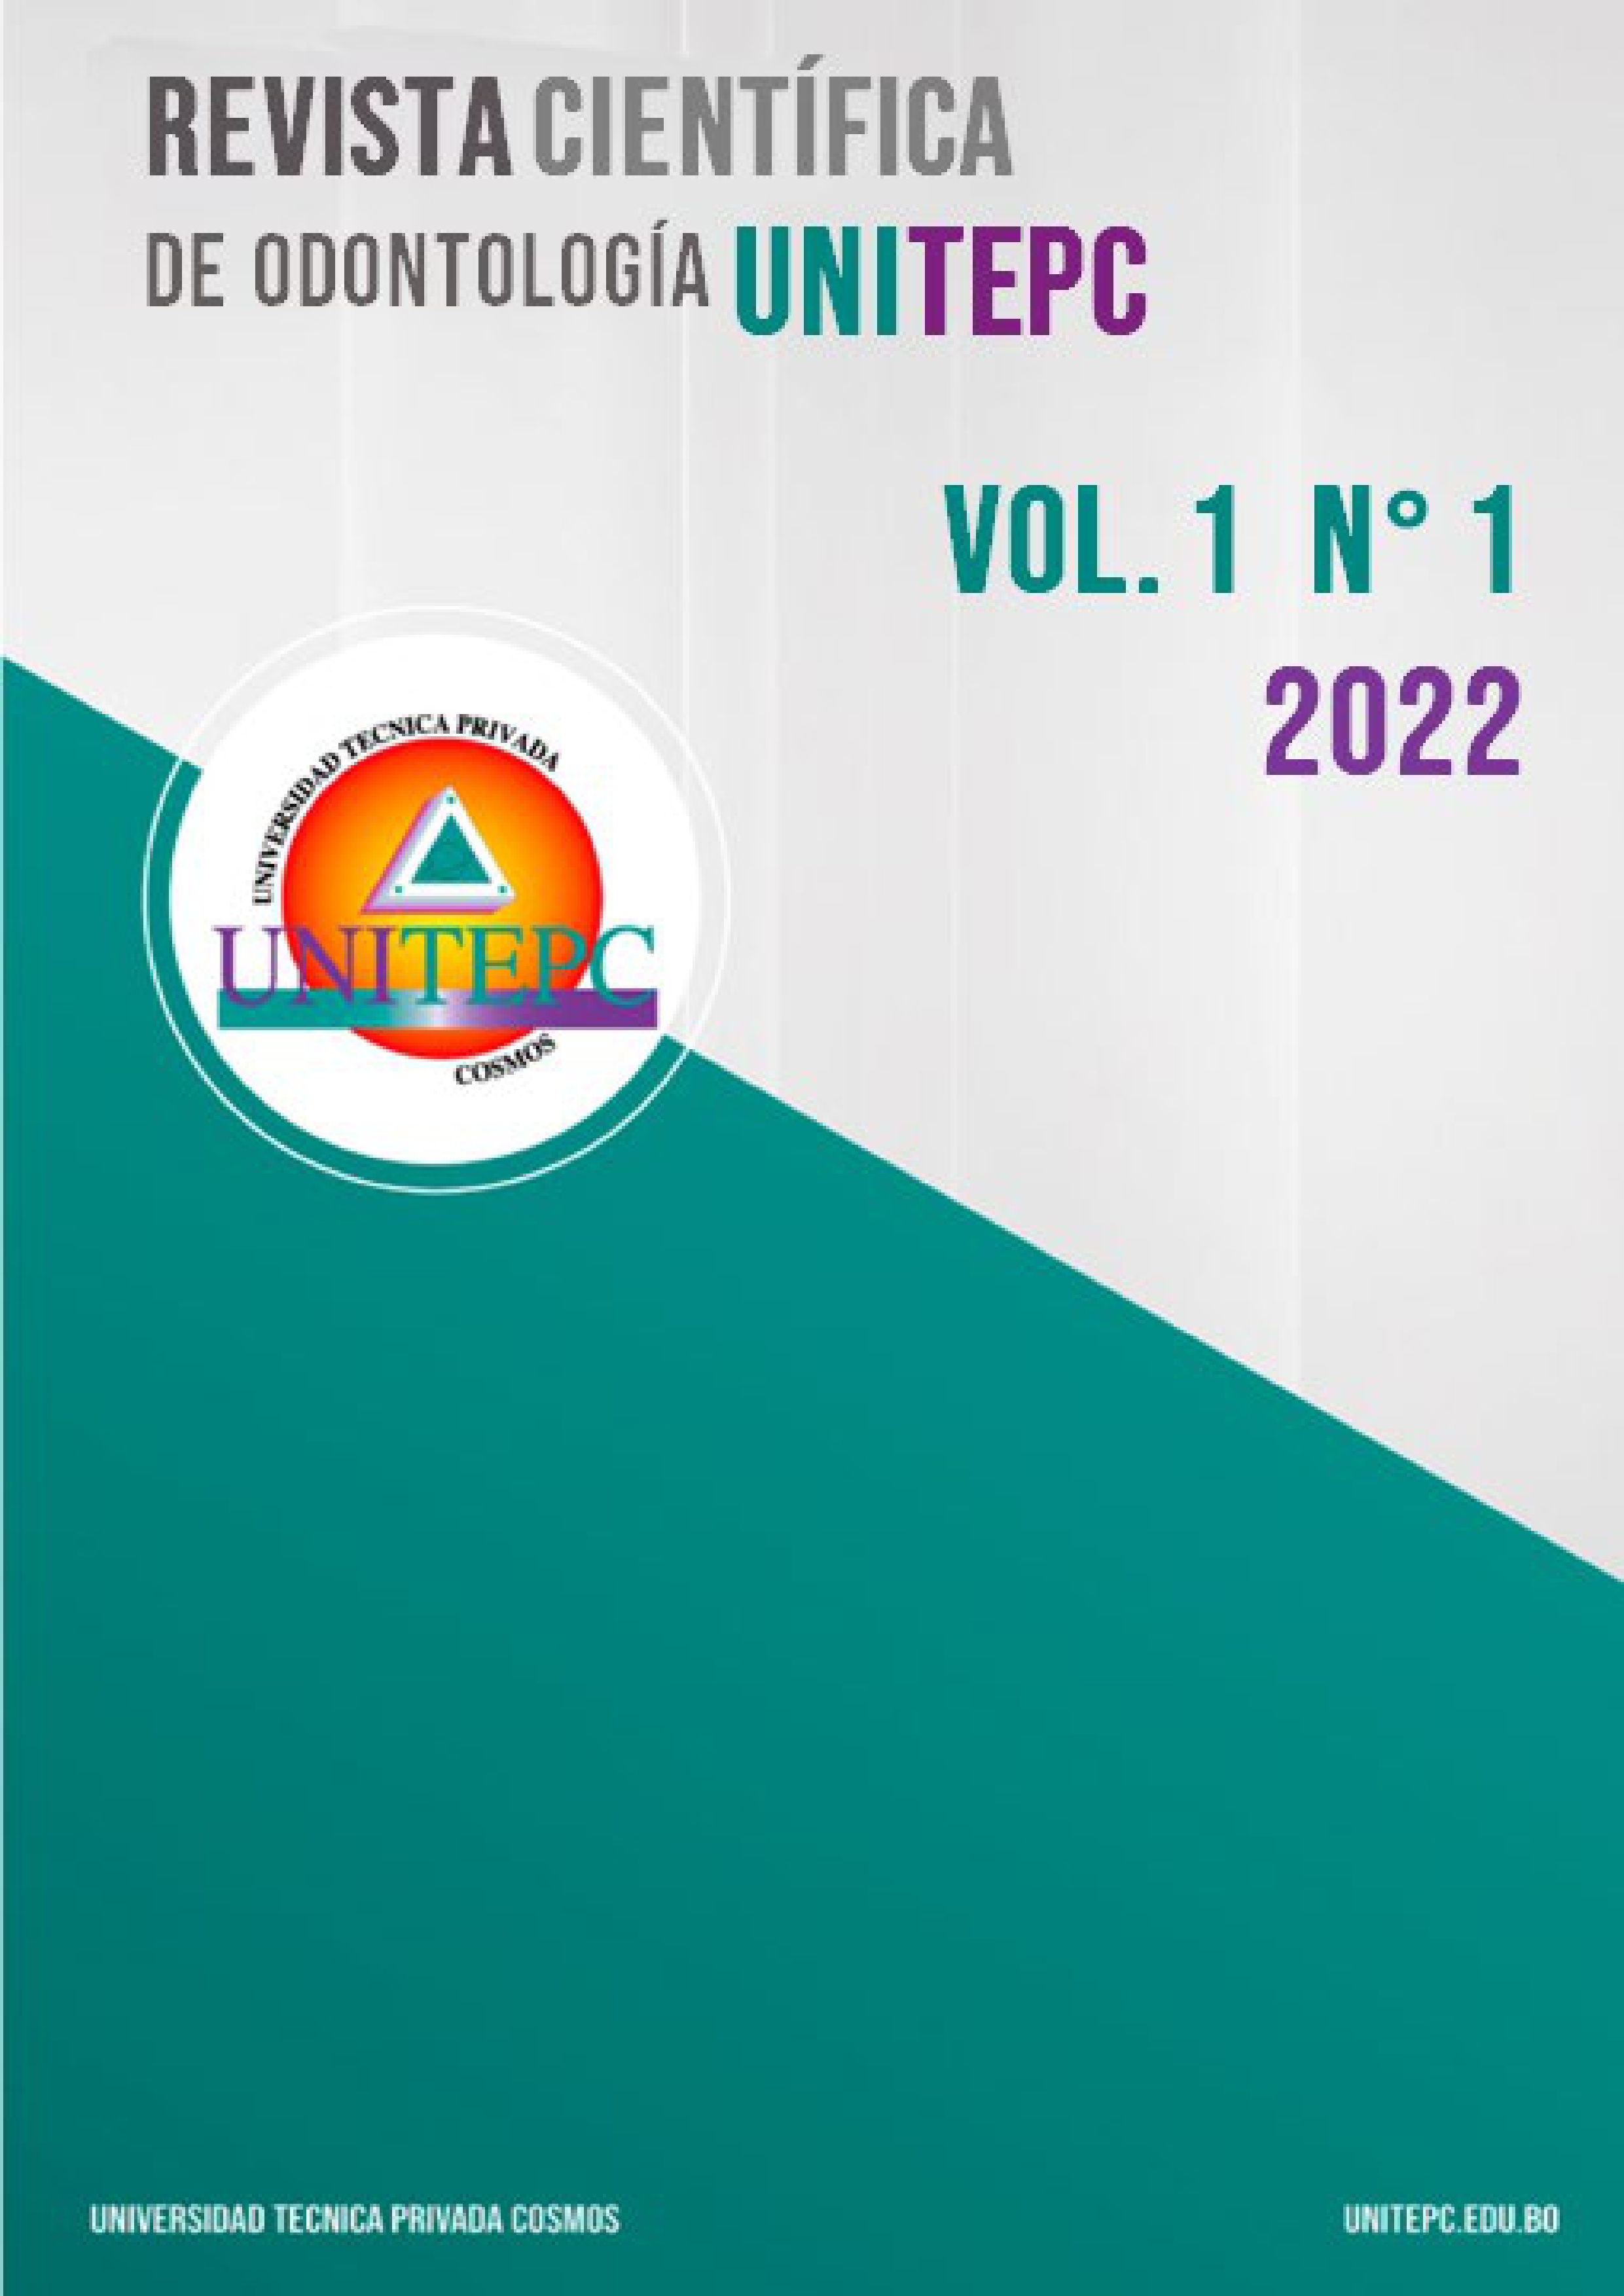 					Ver Vol. 1 Núm. 1 (2022): Revista Científica de Odontología UNITEPC
				